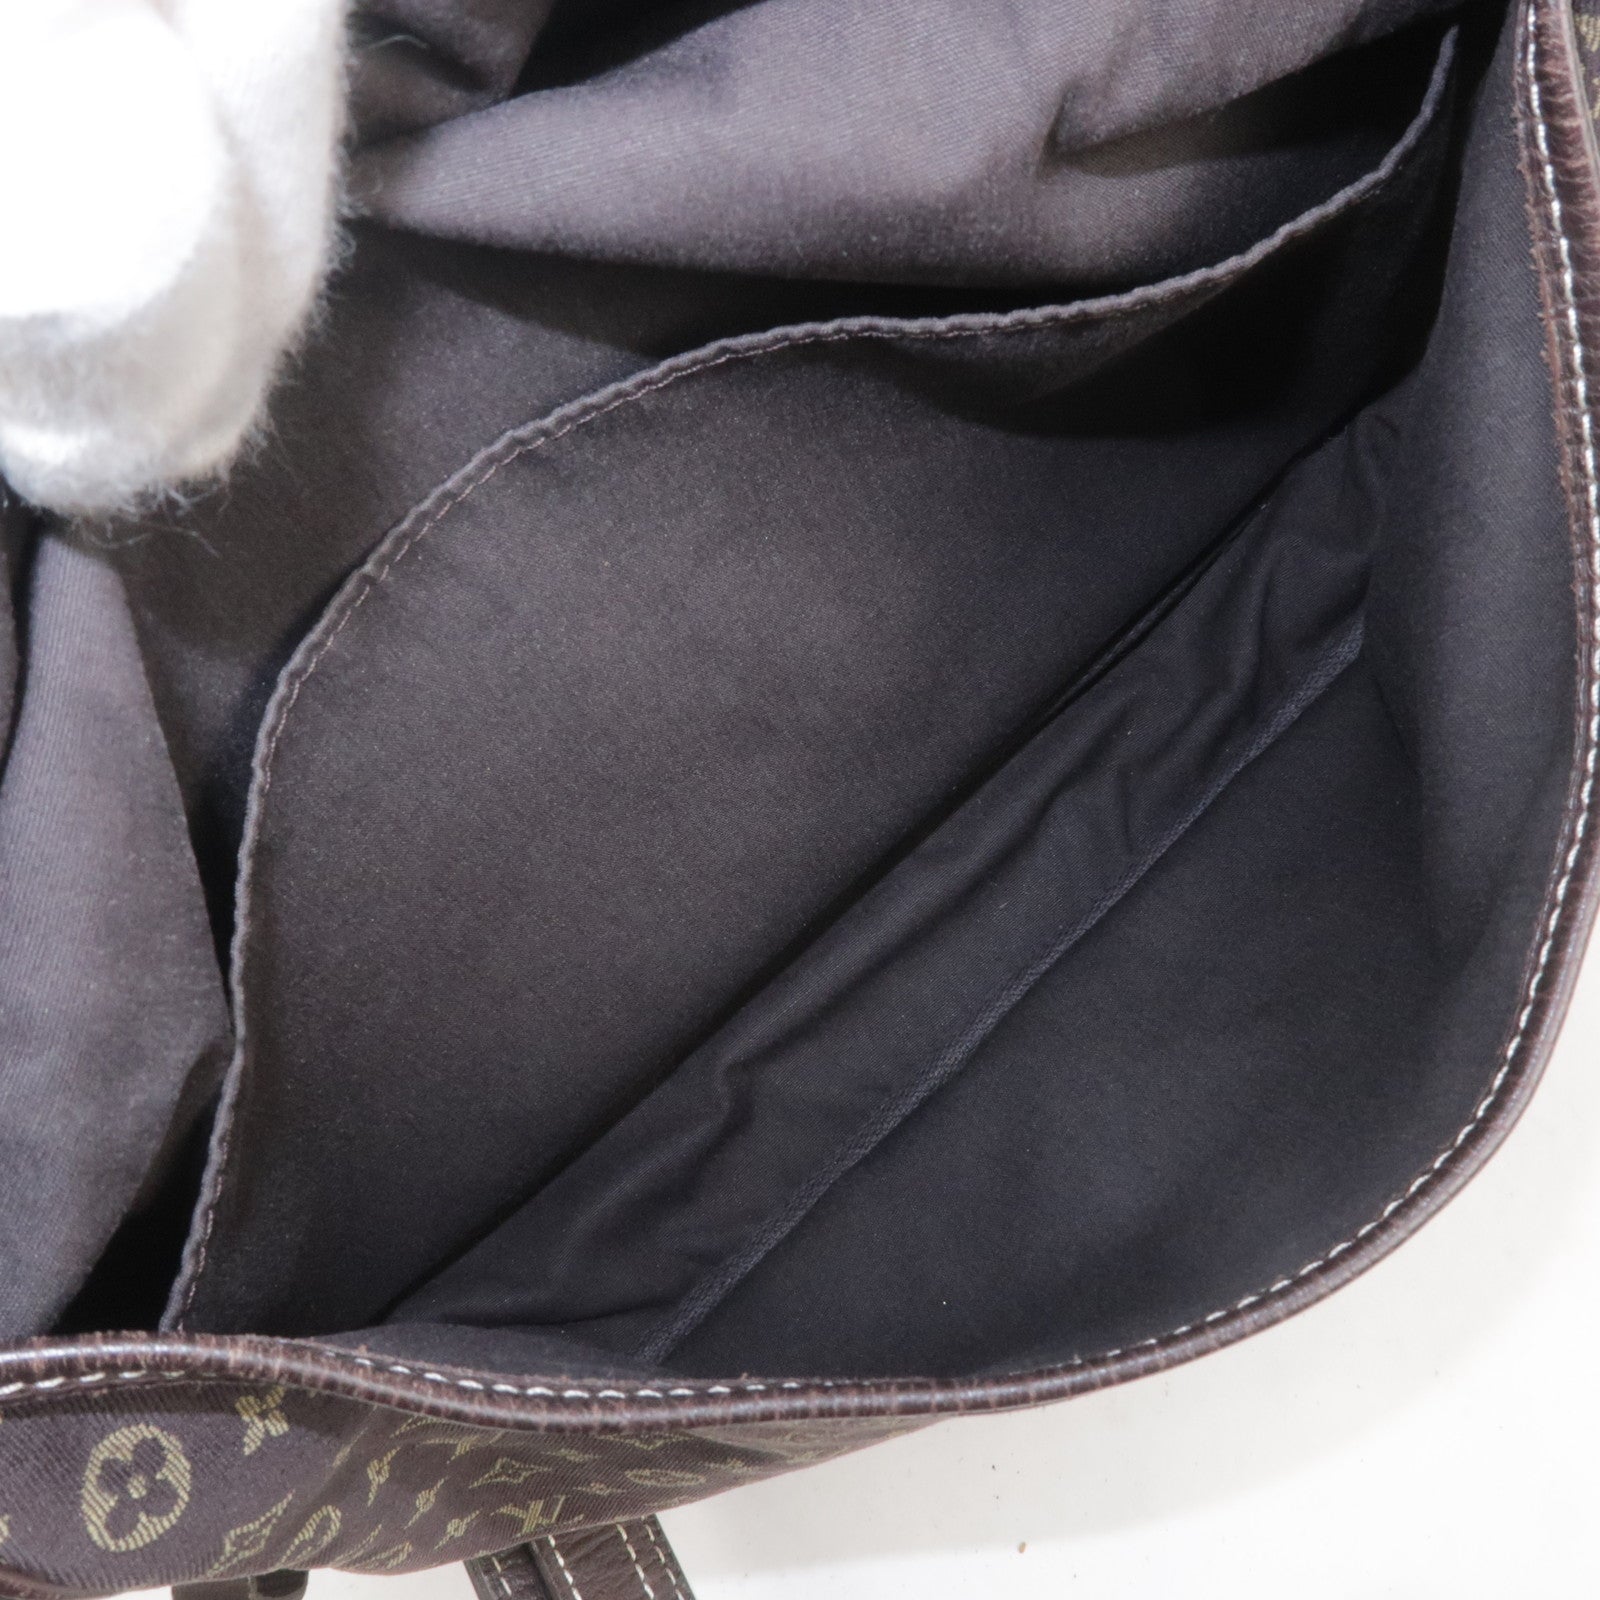 Louis Vuitton Mini Lin Saumur 40 Large Satchel Bag